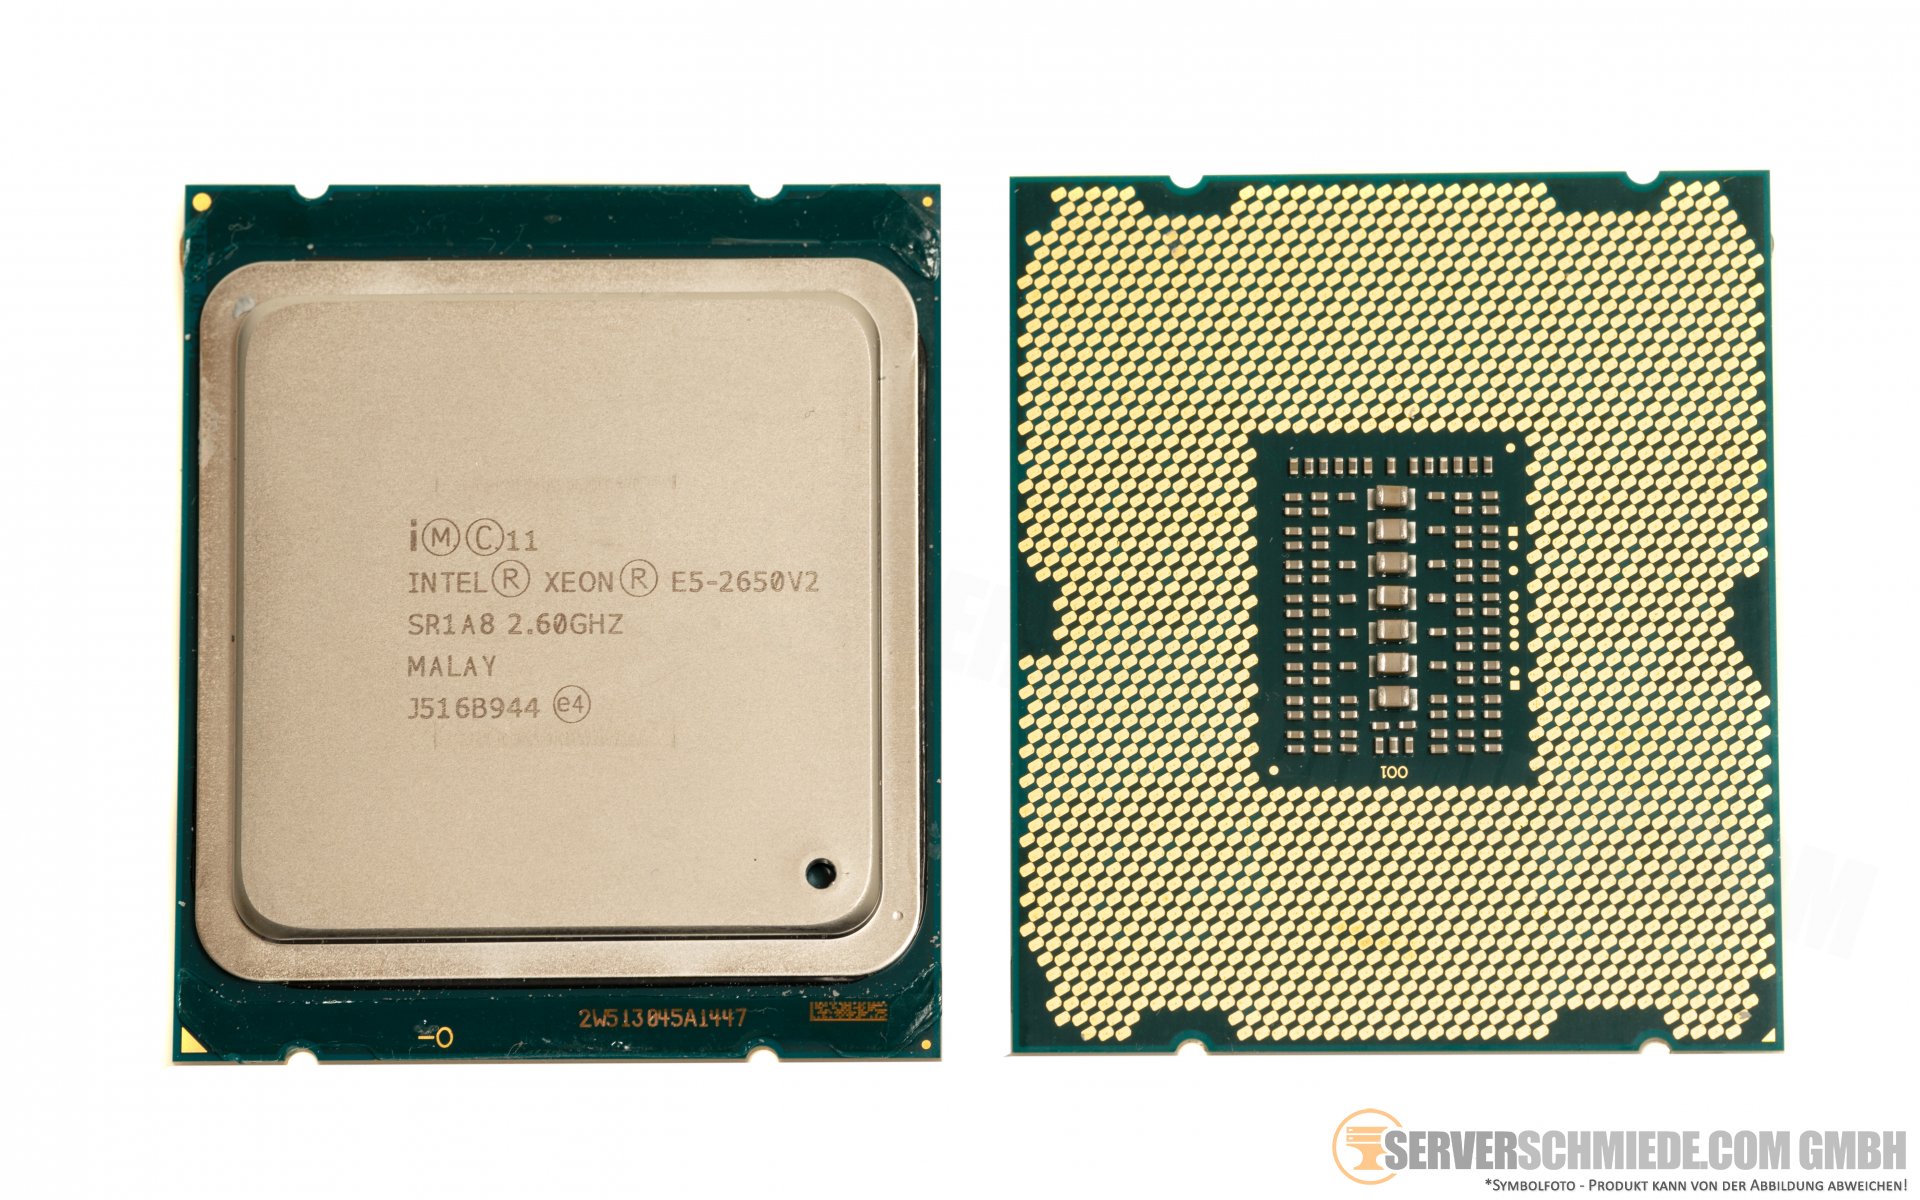 Интел е5 2650. Intel Xeon 2650v2. Xeon e5 2650 v2. Интел Xeon e5 2650 v2. Процессор 2650 v2.